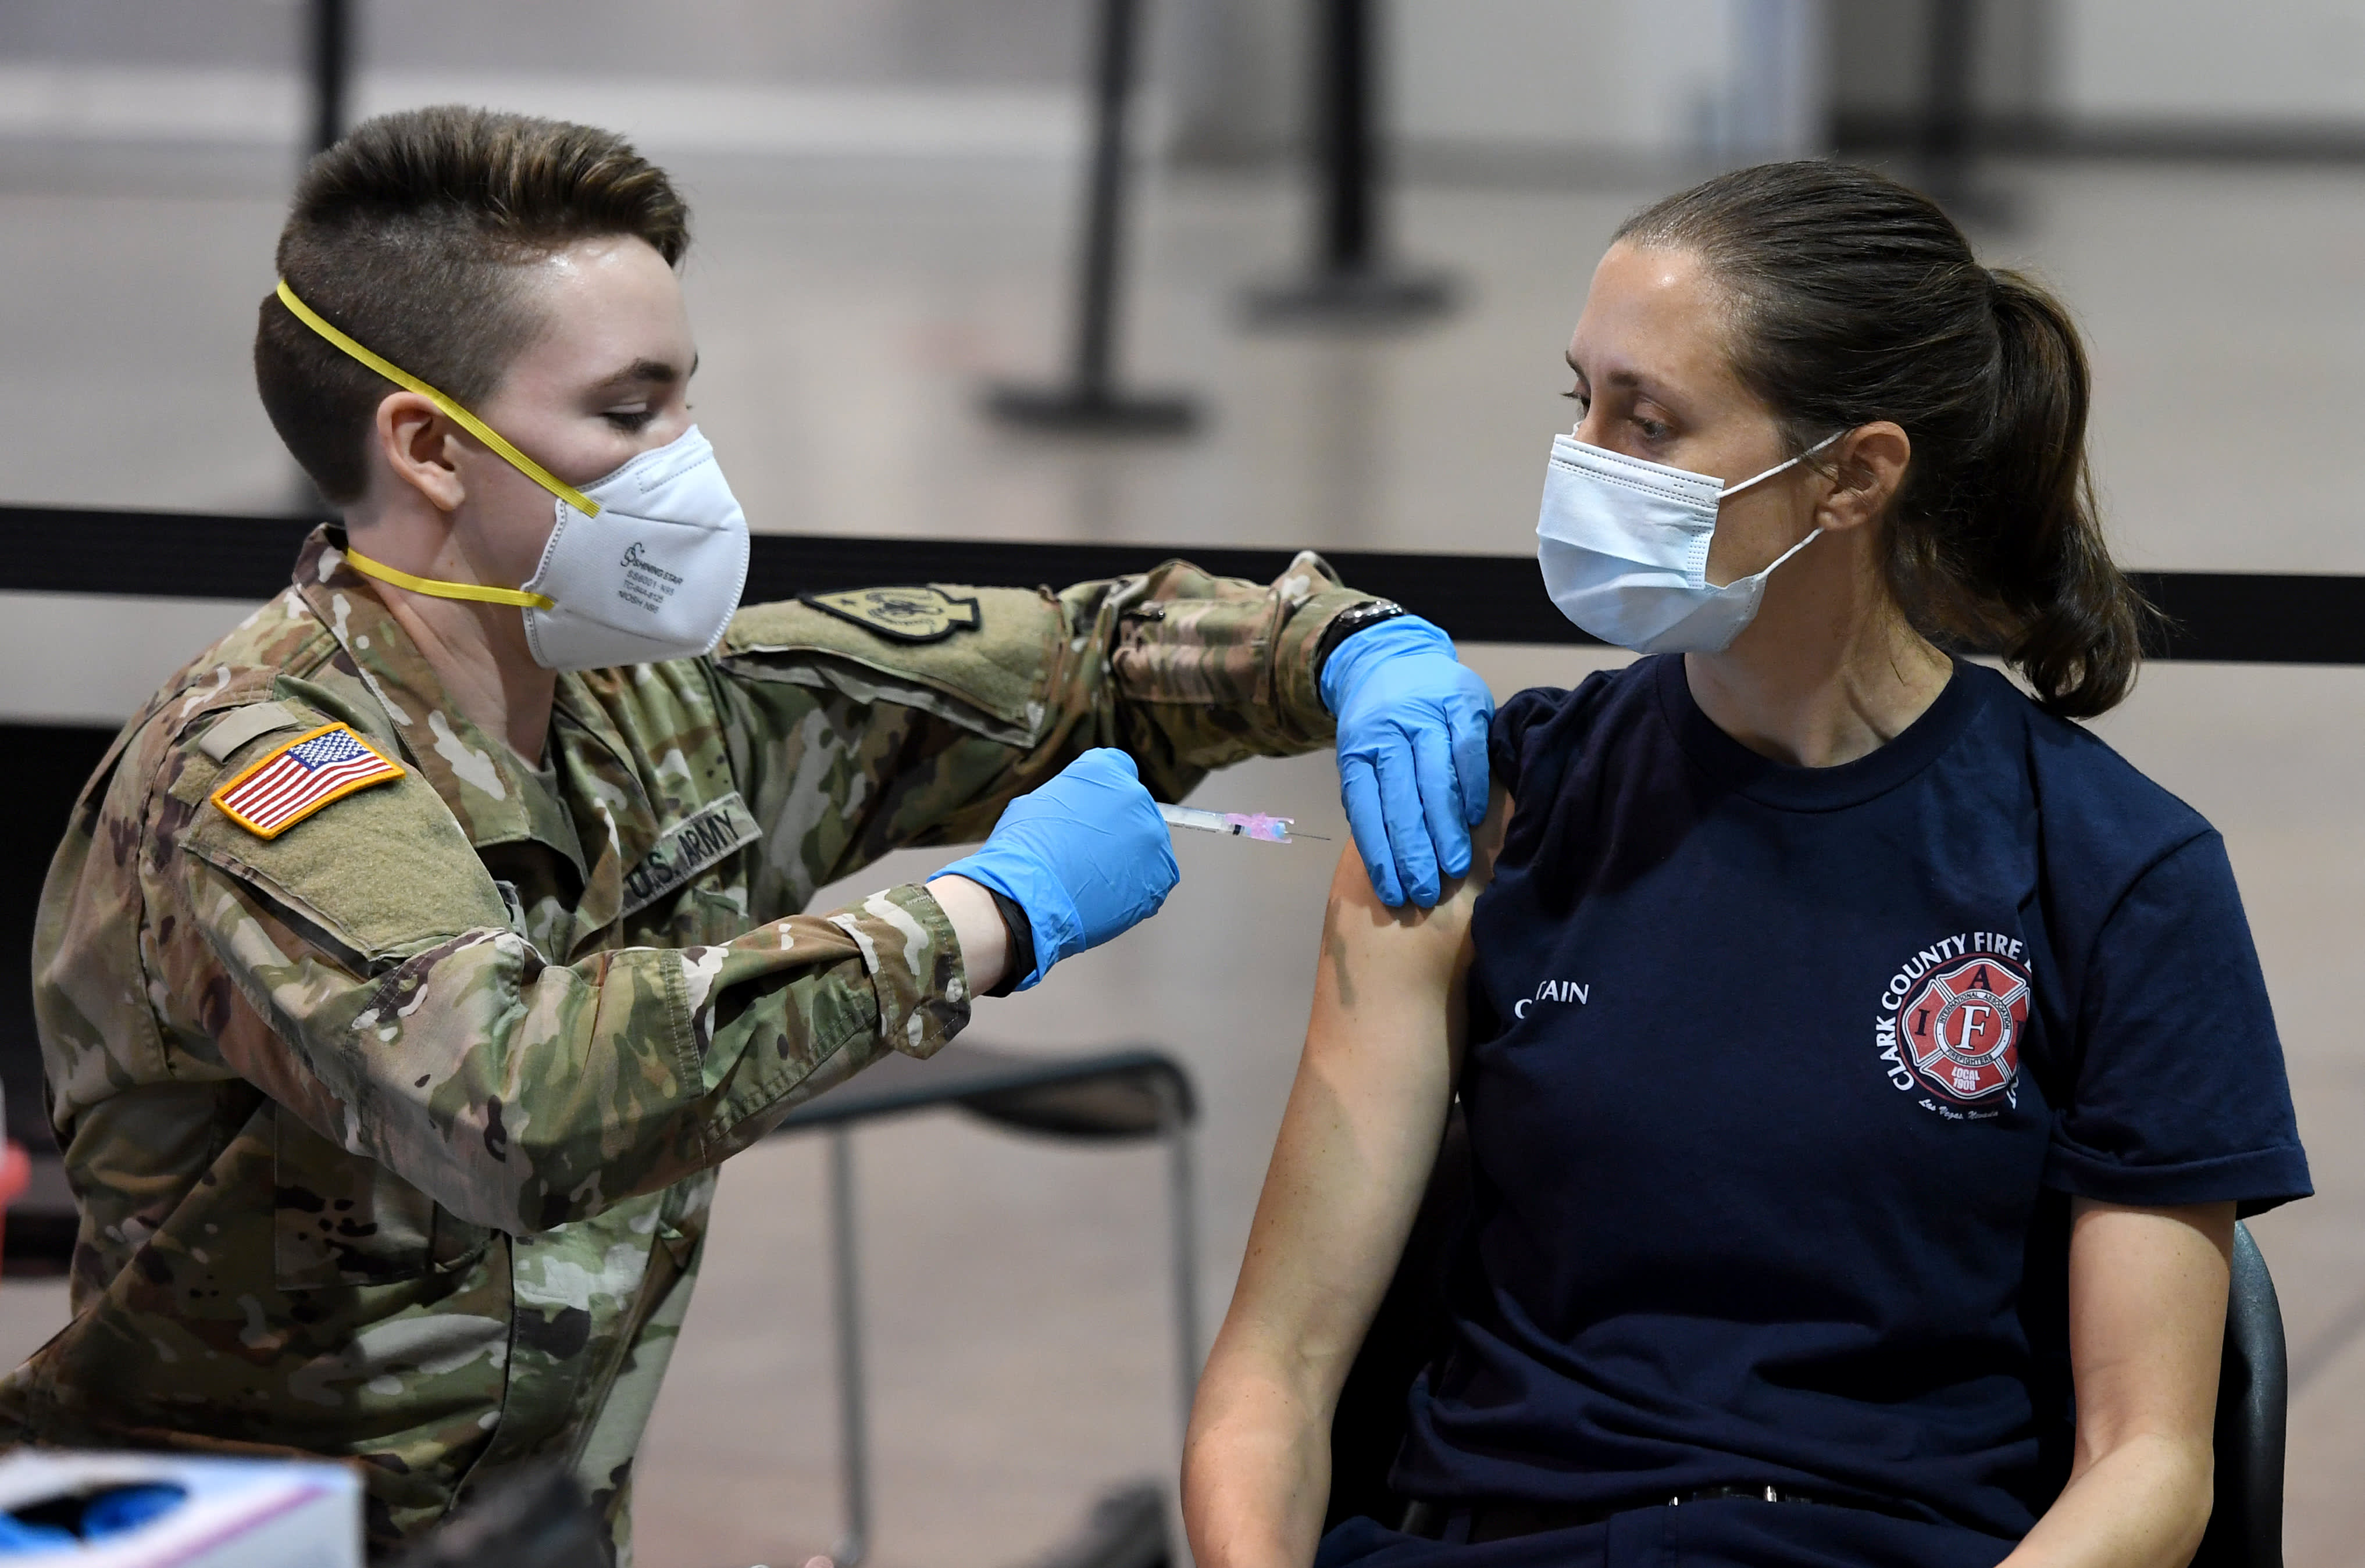 Pray to set up FEMA, national guard, to set up Covid vaccine clinics across the US